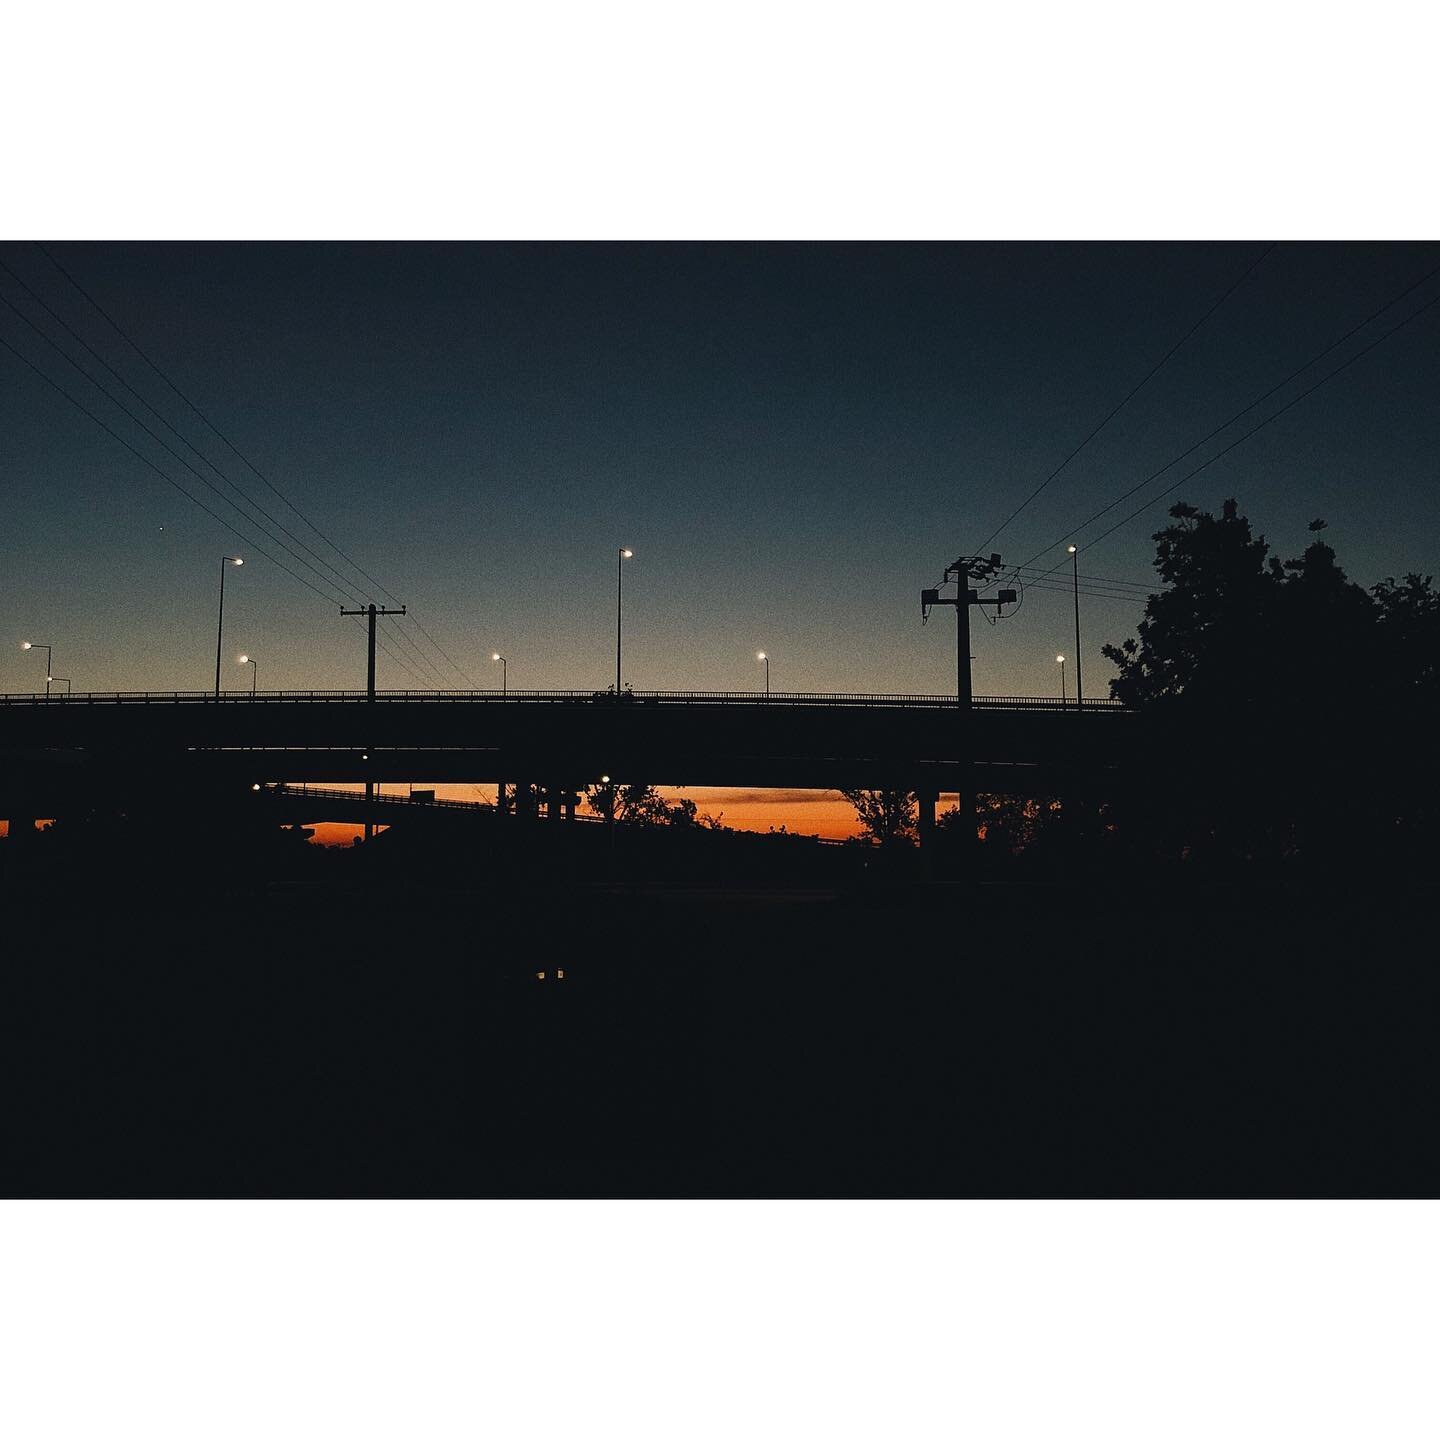 🌗 #vsco #vscocam #sunset #highway #urban #tealandorange #blueandorange #whitagram #midnightsun #road #urbex #architecture #mood #minimalism